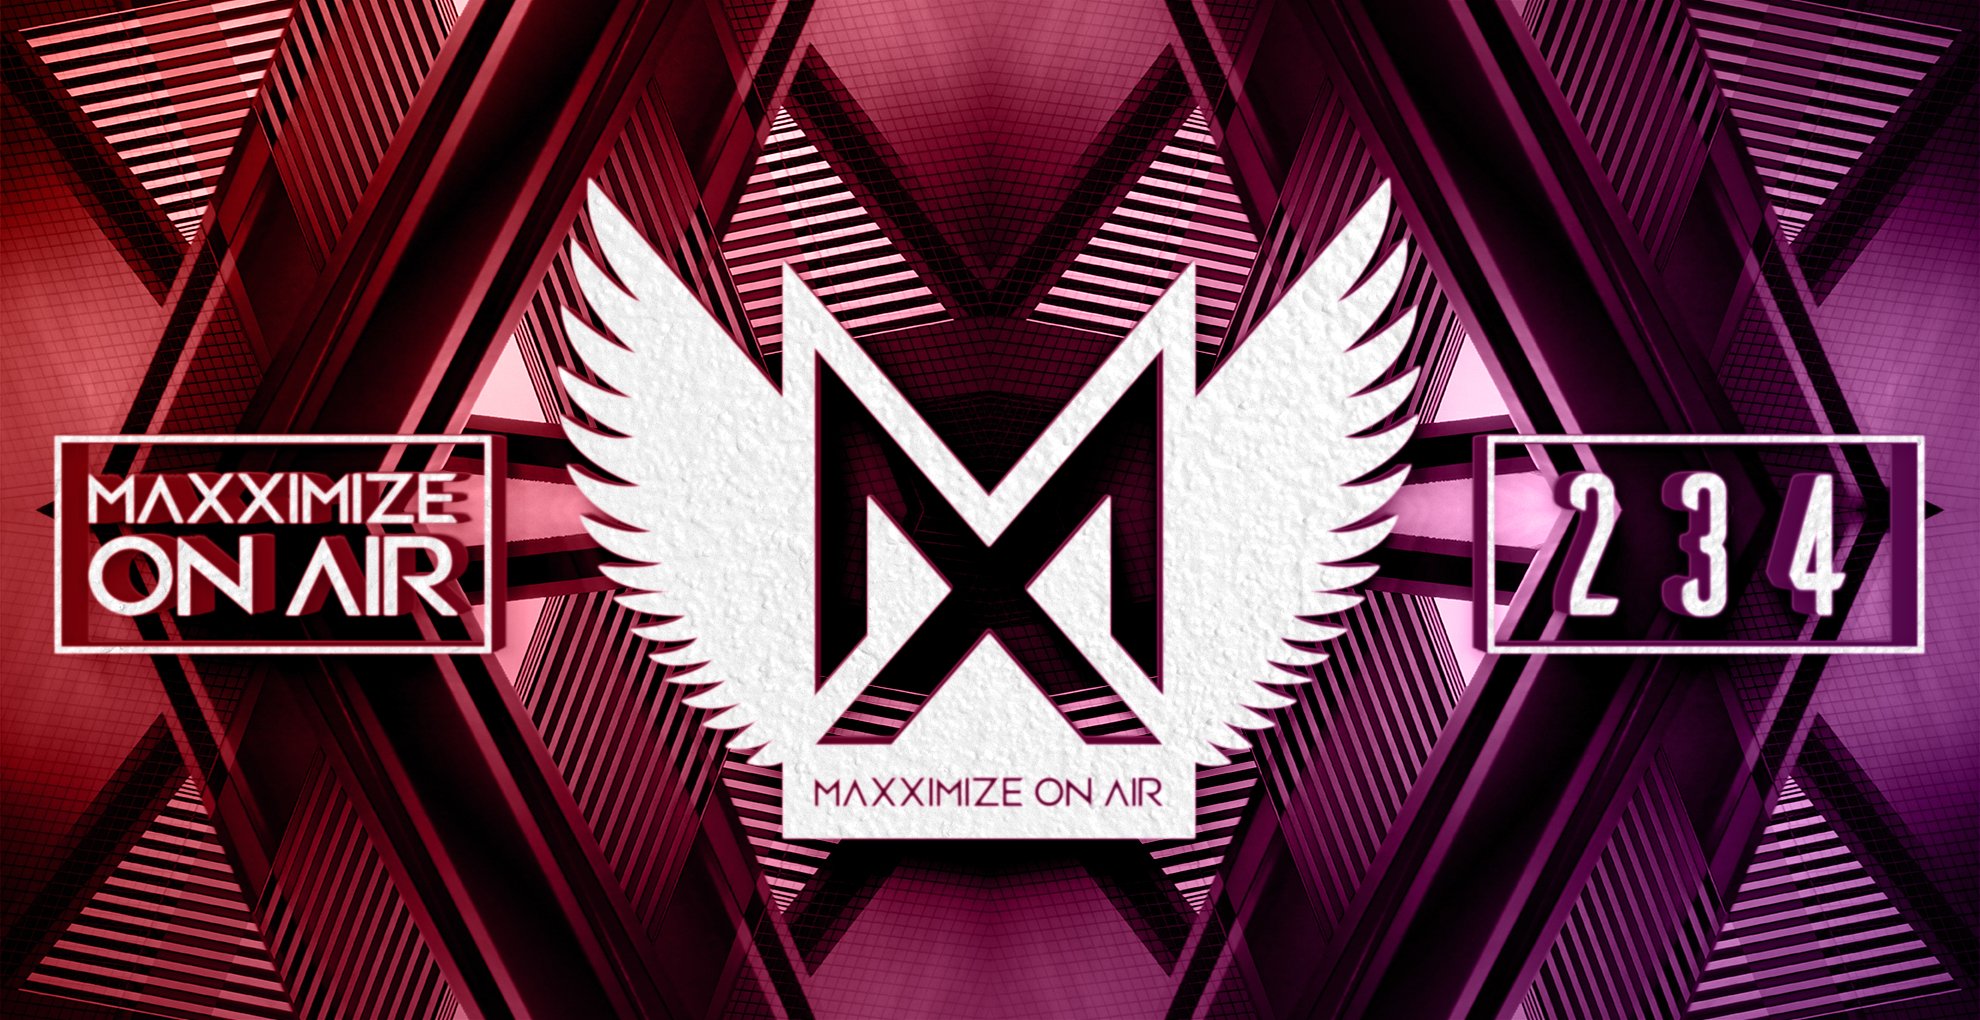 Maxximize Air (@MaxximizeOnAir) / Twitter